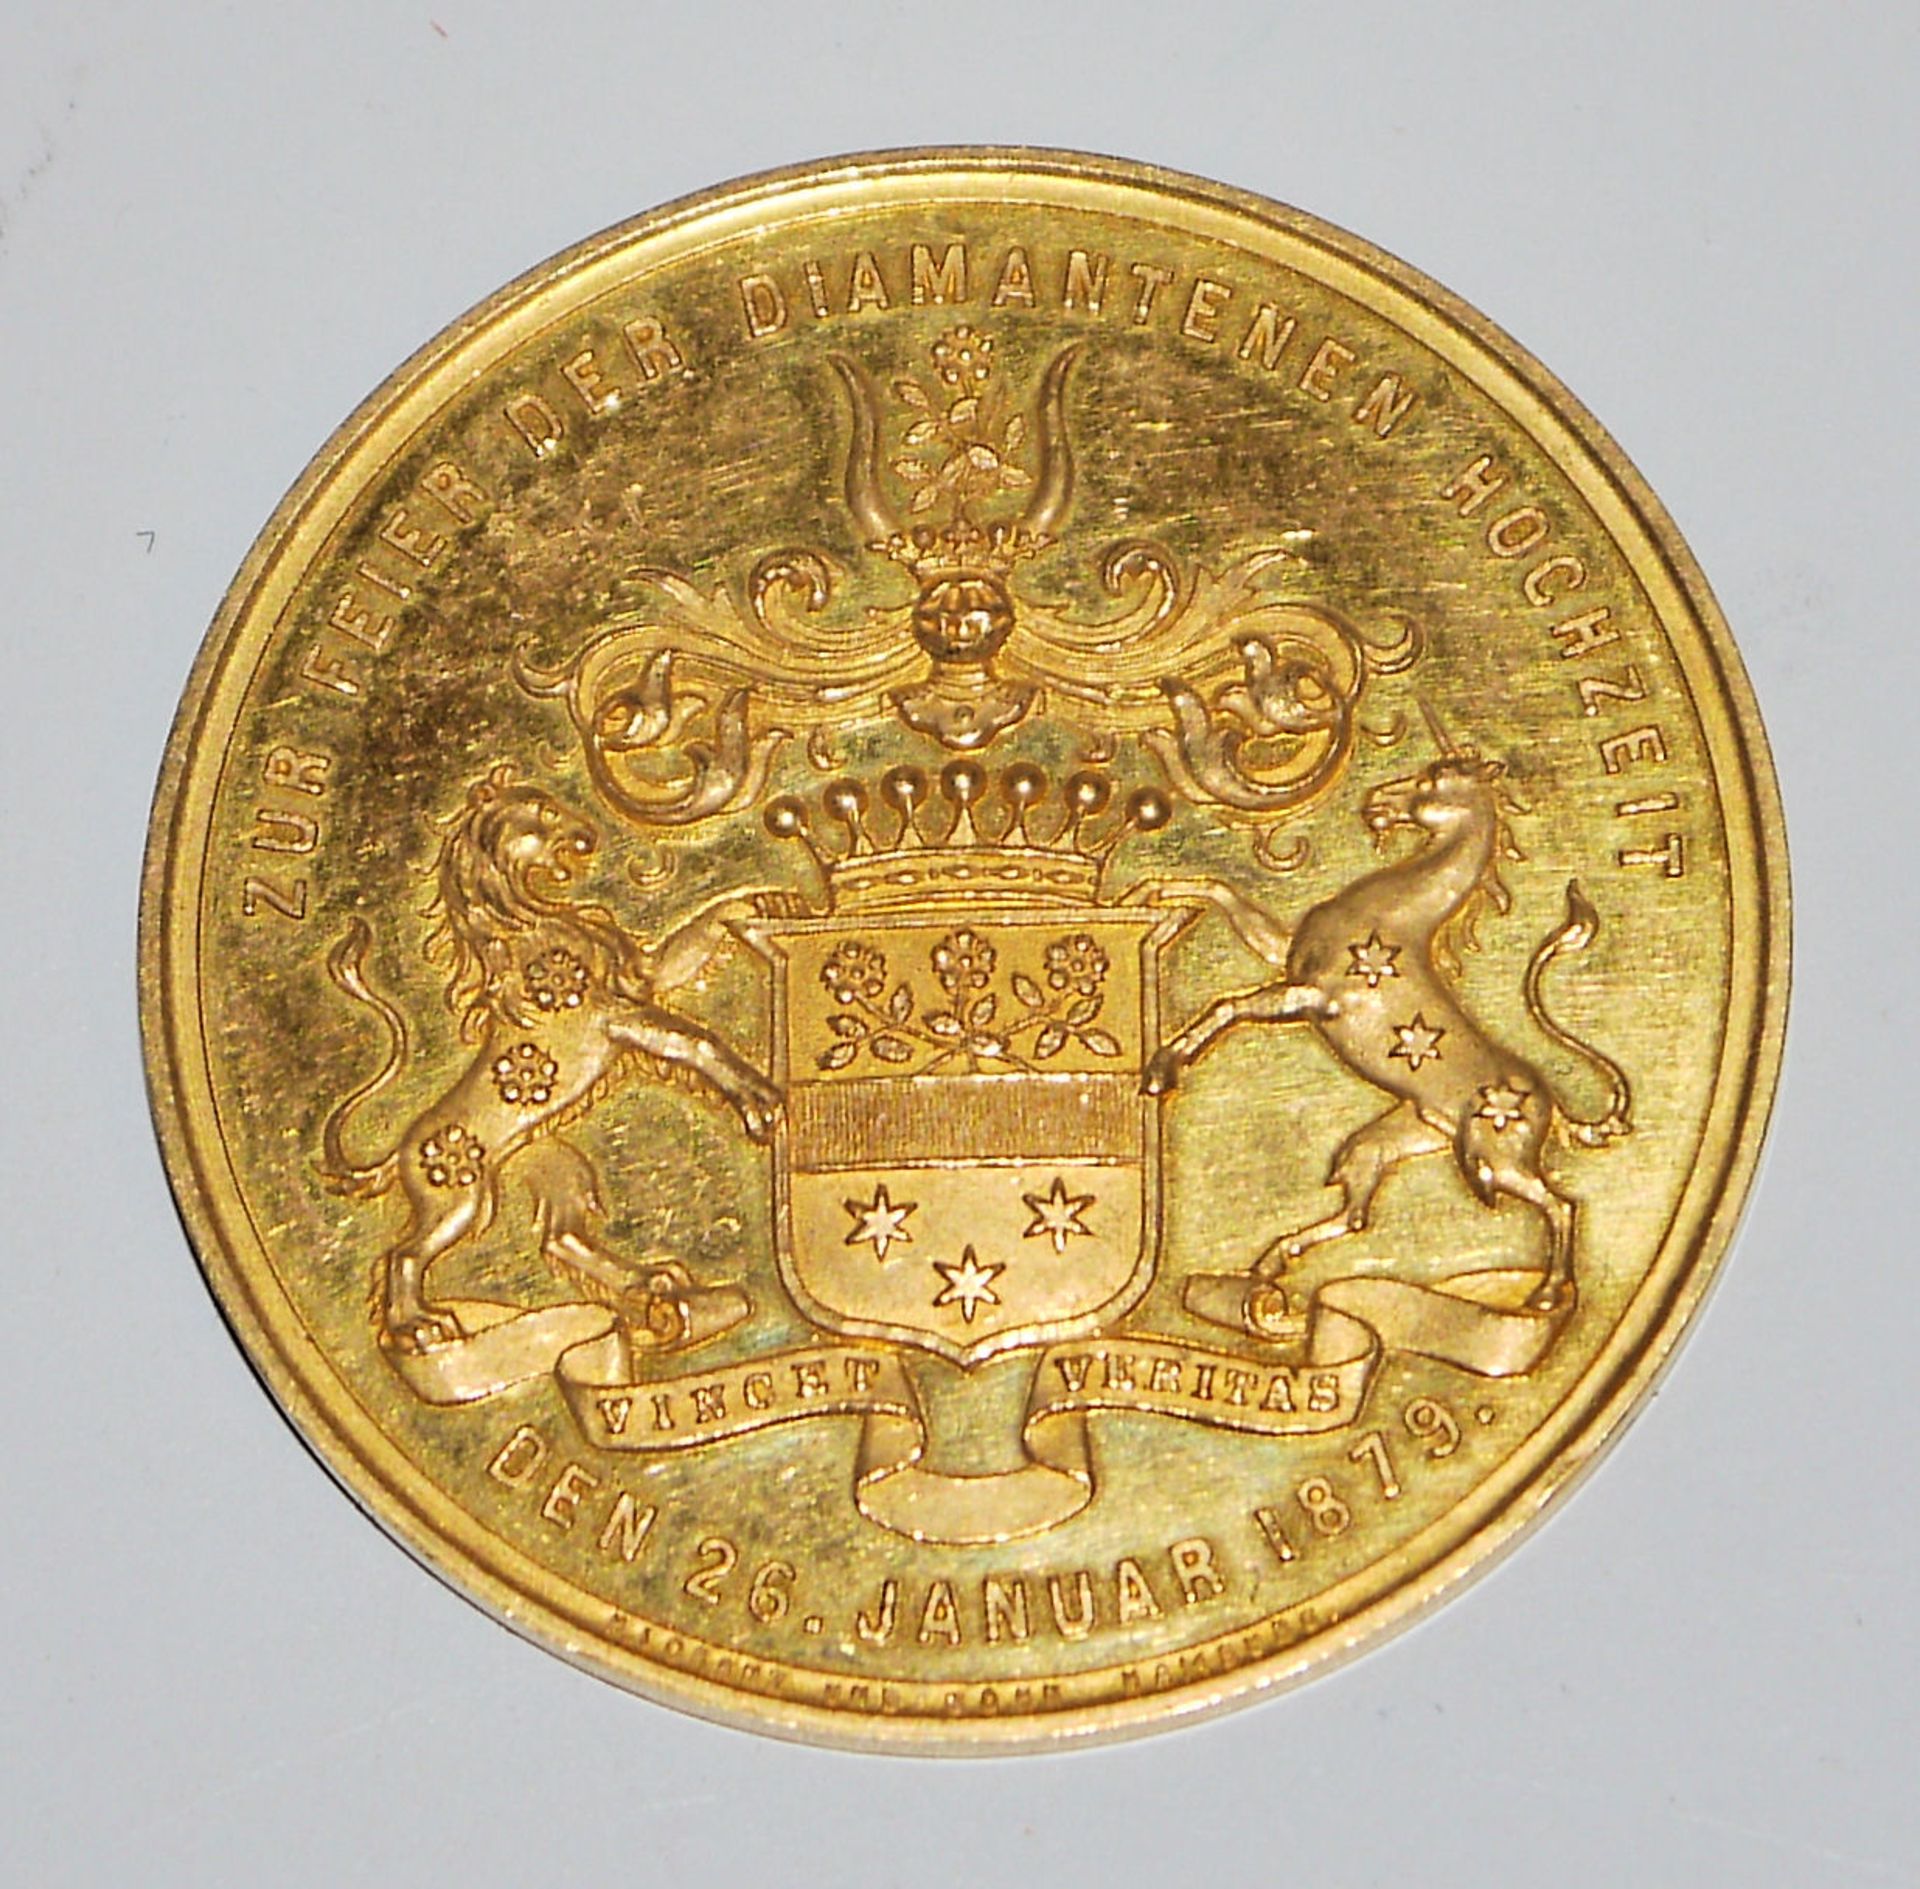 Hamburger Jubiläums-Goldmedaille, Portugalöser zu 100 Mark 1879, selten ! - Bild 2 aus 2